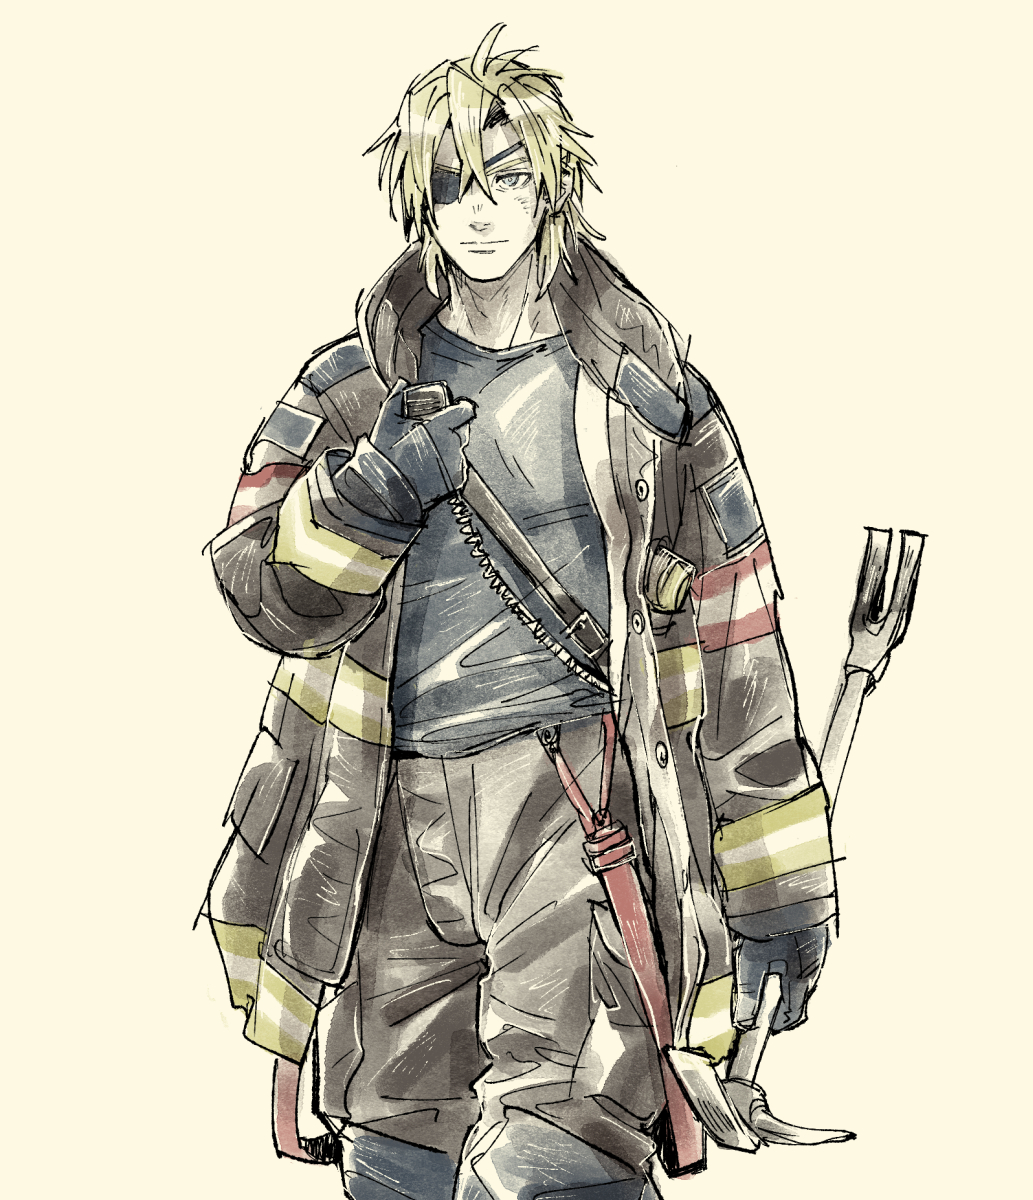 「firefighter au? 」|かも(kamo)🦆のイラスト